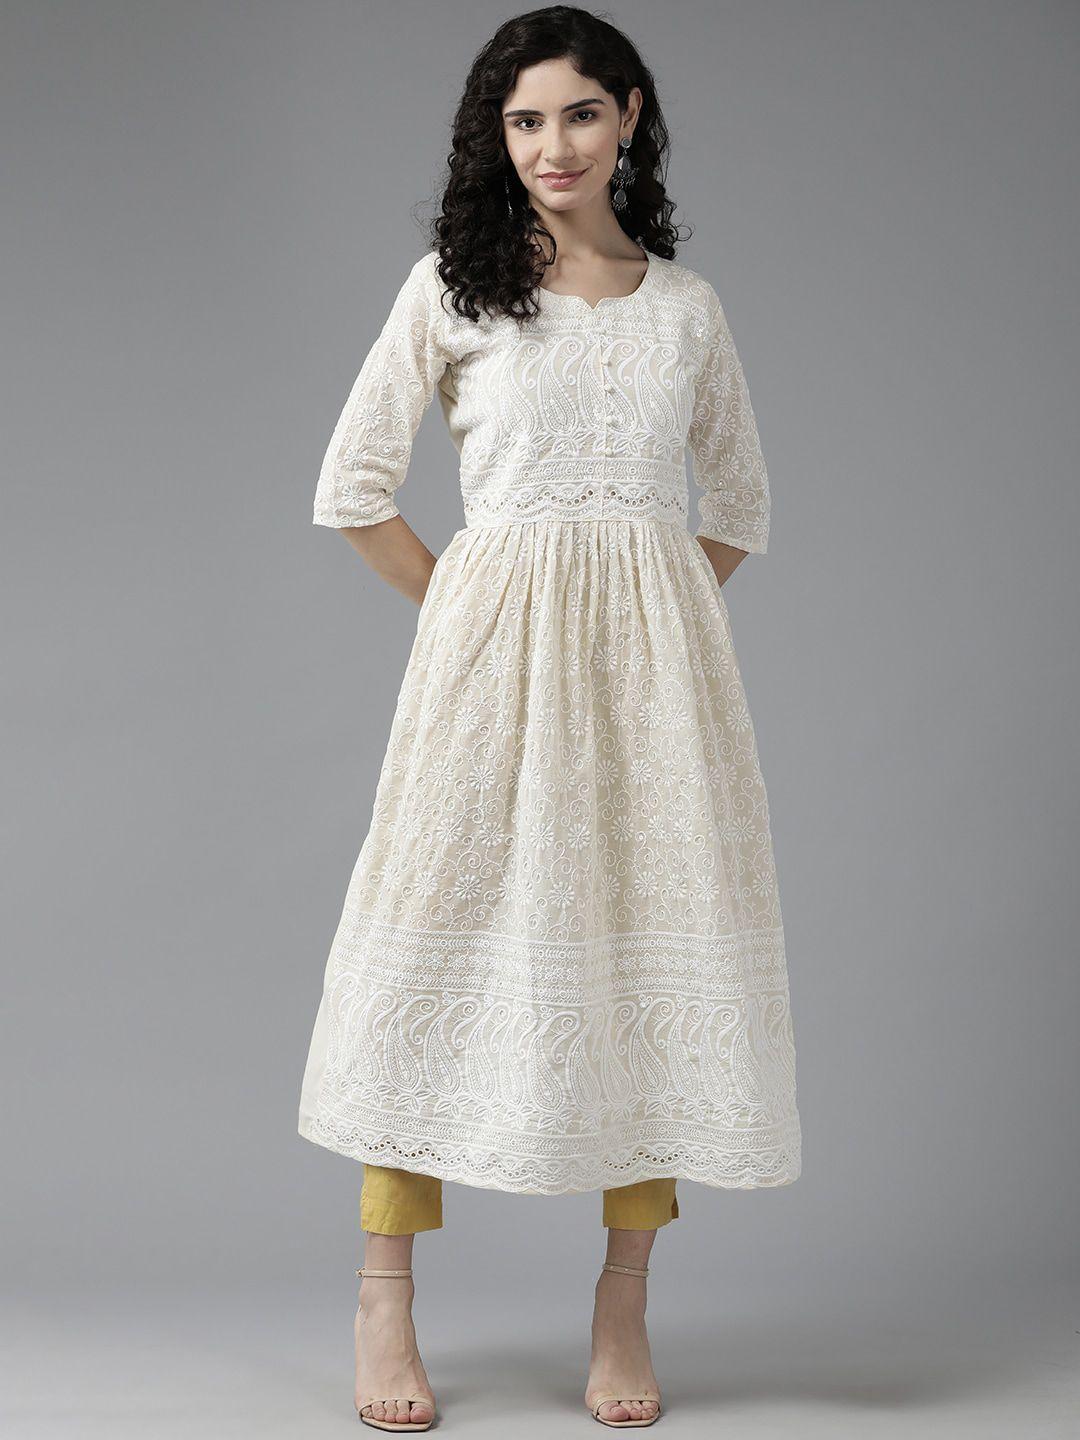 baesd ethnic motifs embroidered chikankari white romance cotton a-line kurta